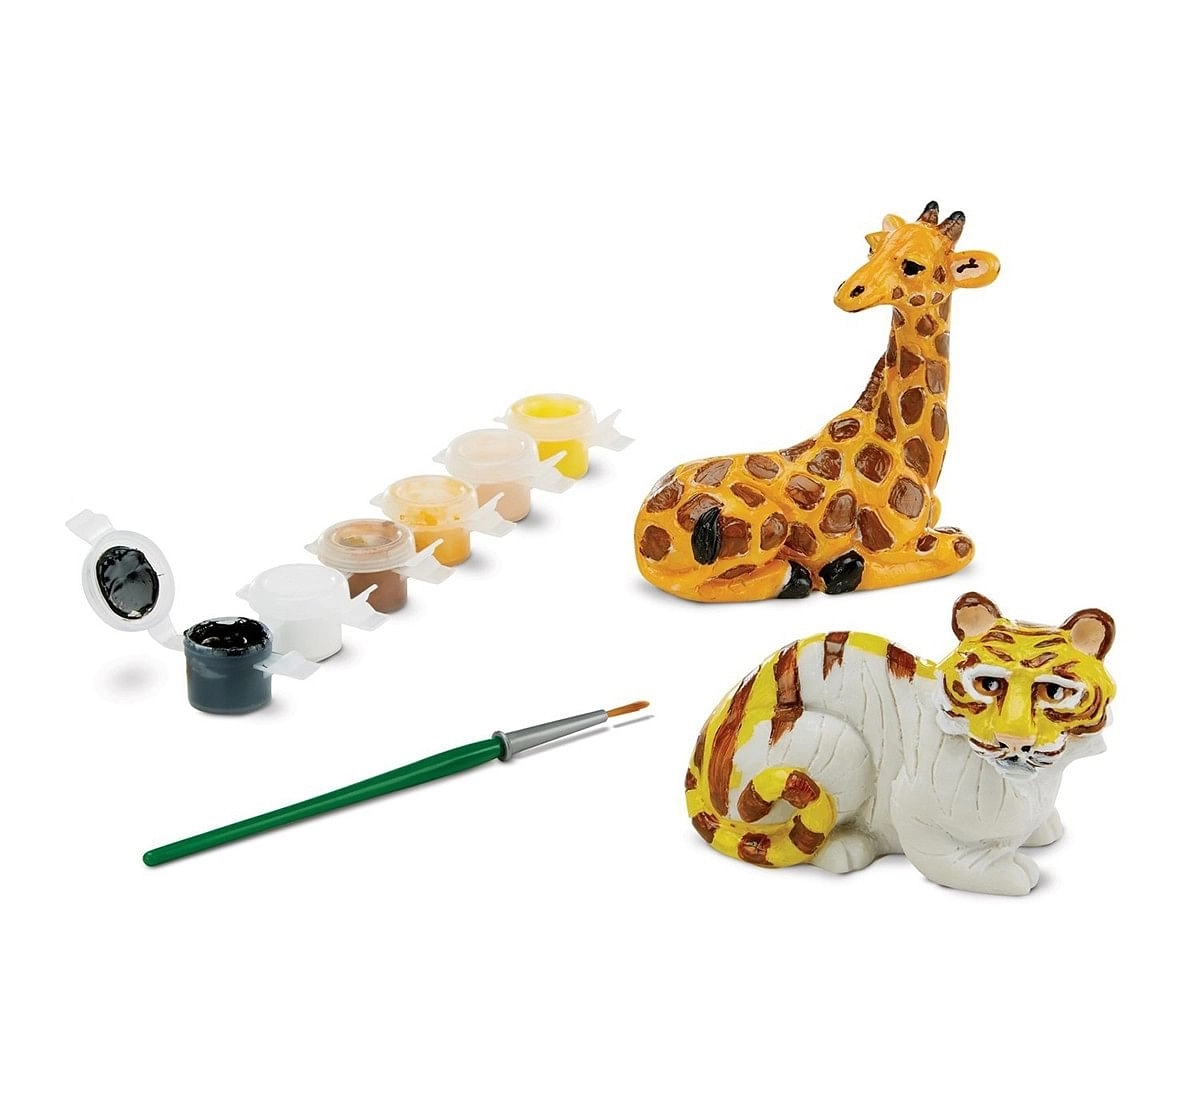 Melissa & Doug Zoo Figurines DIY Art and Craft Kits for Kids age 8Y+ 